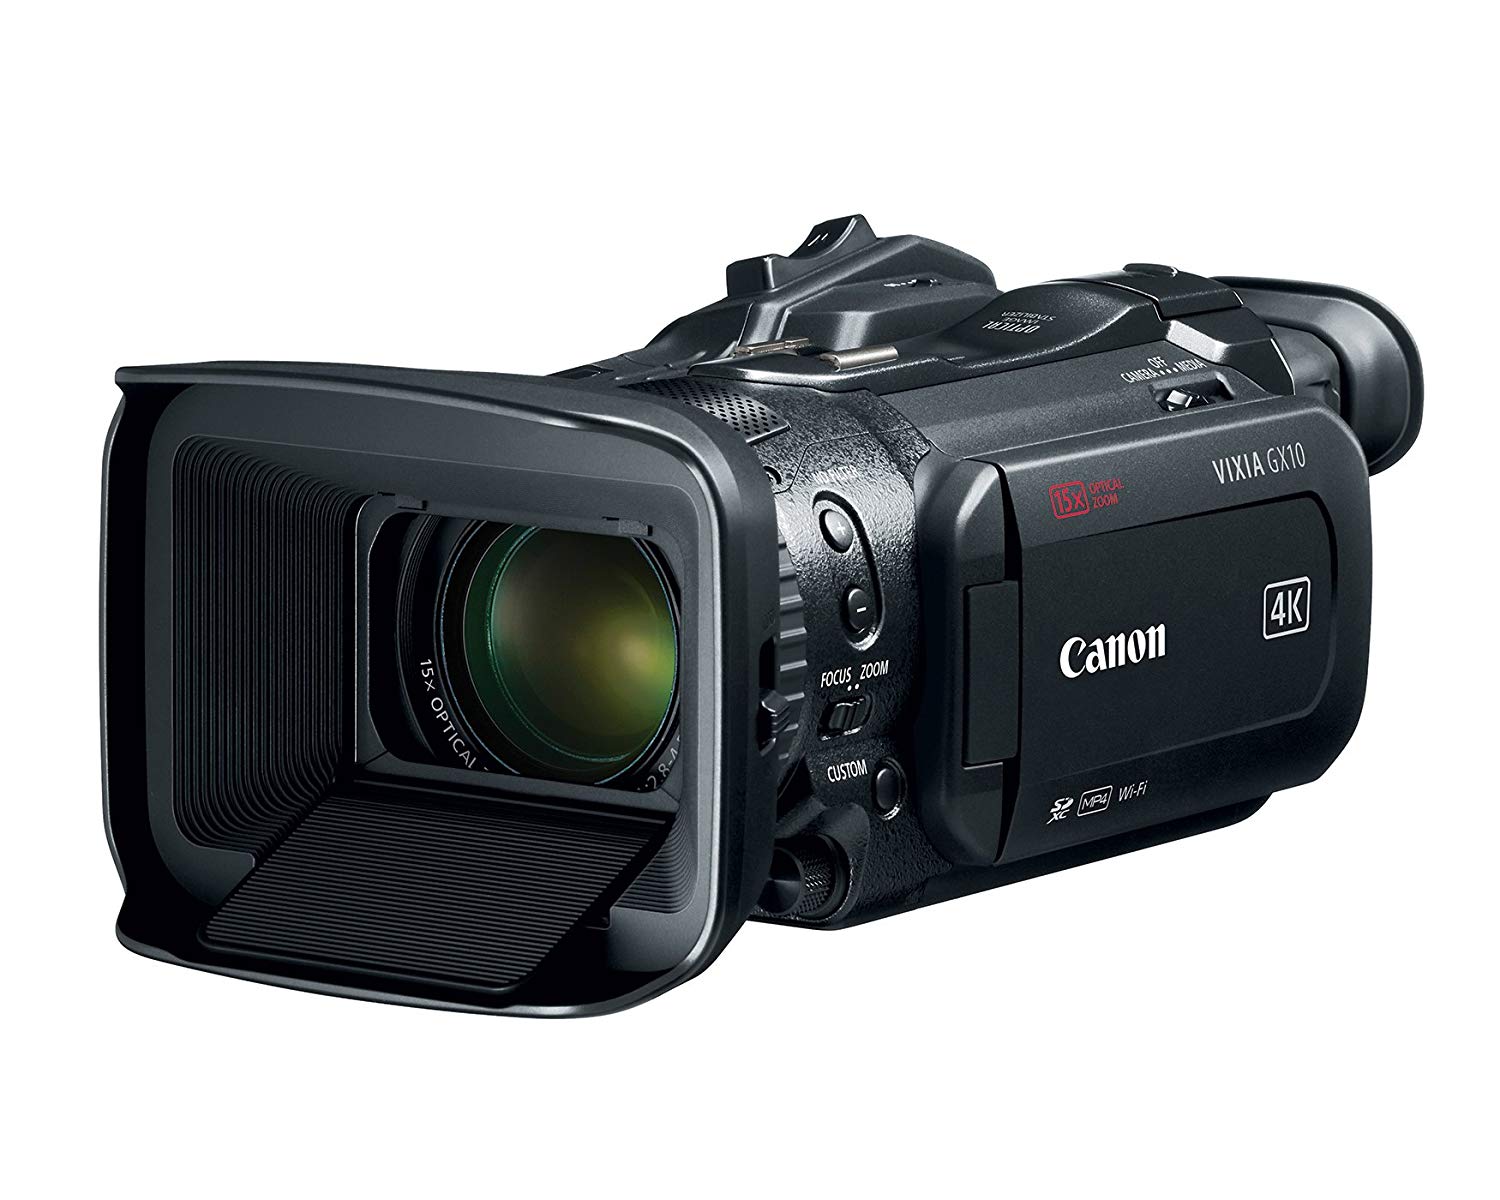 Canon Vixia GX10 Wi-Fi 4K Ultra HD Digital Video Camcorder